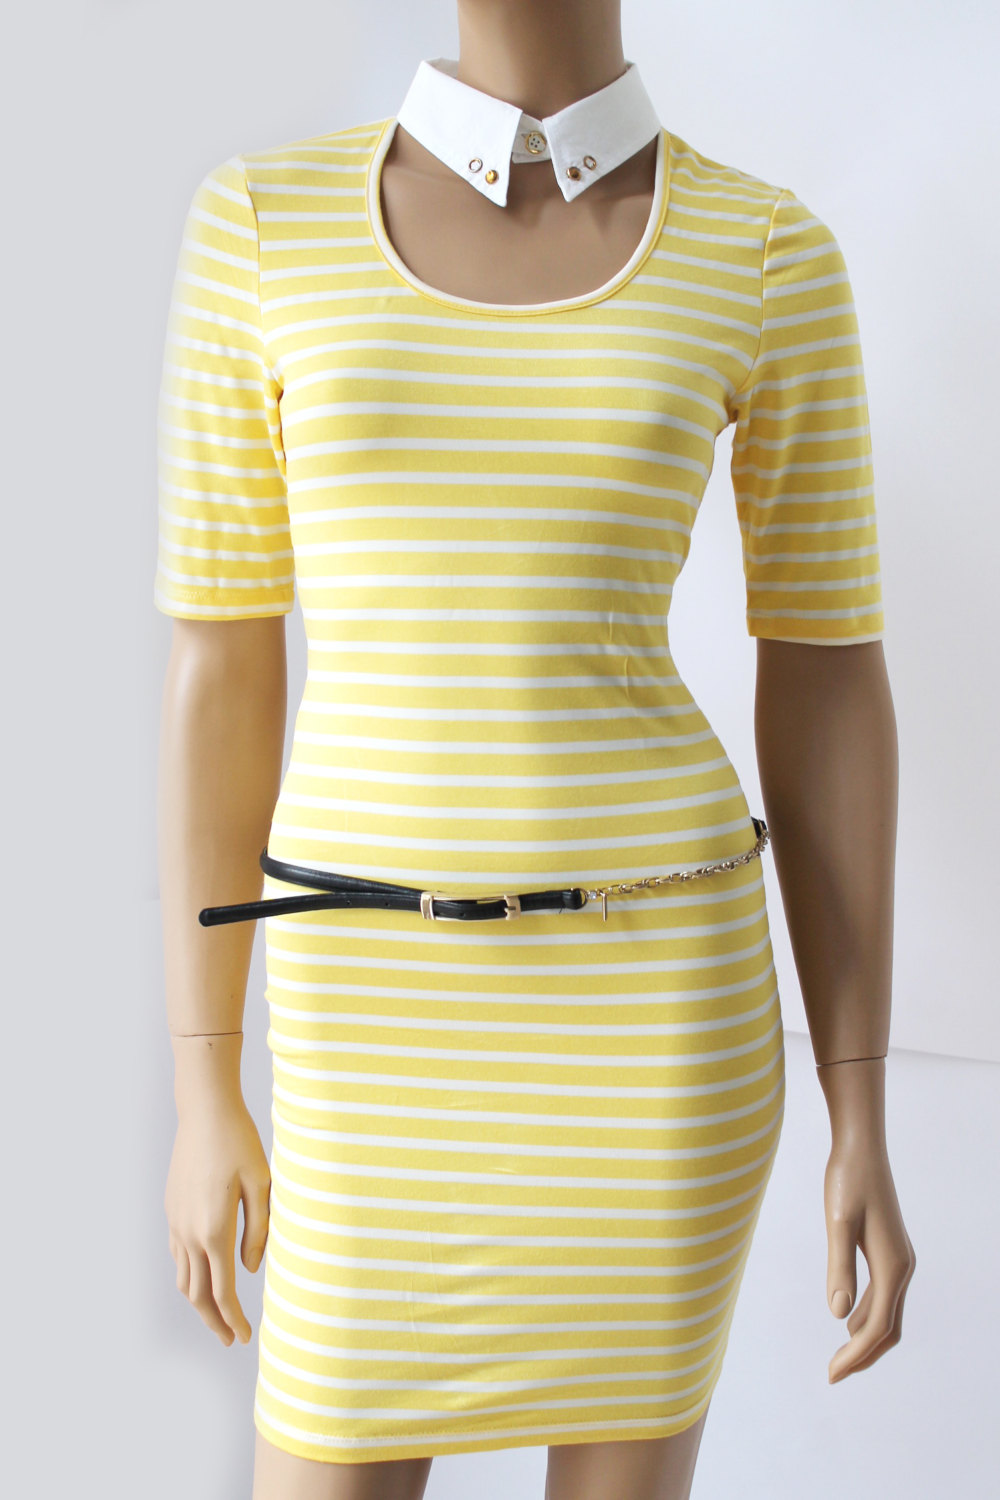 Yellow And White /cotton/ Women's Striped Casual /mini Dress/ Tunic